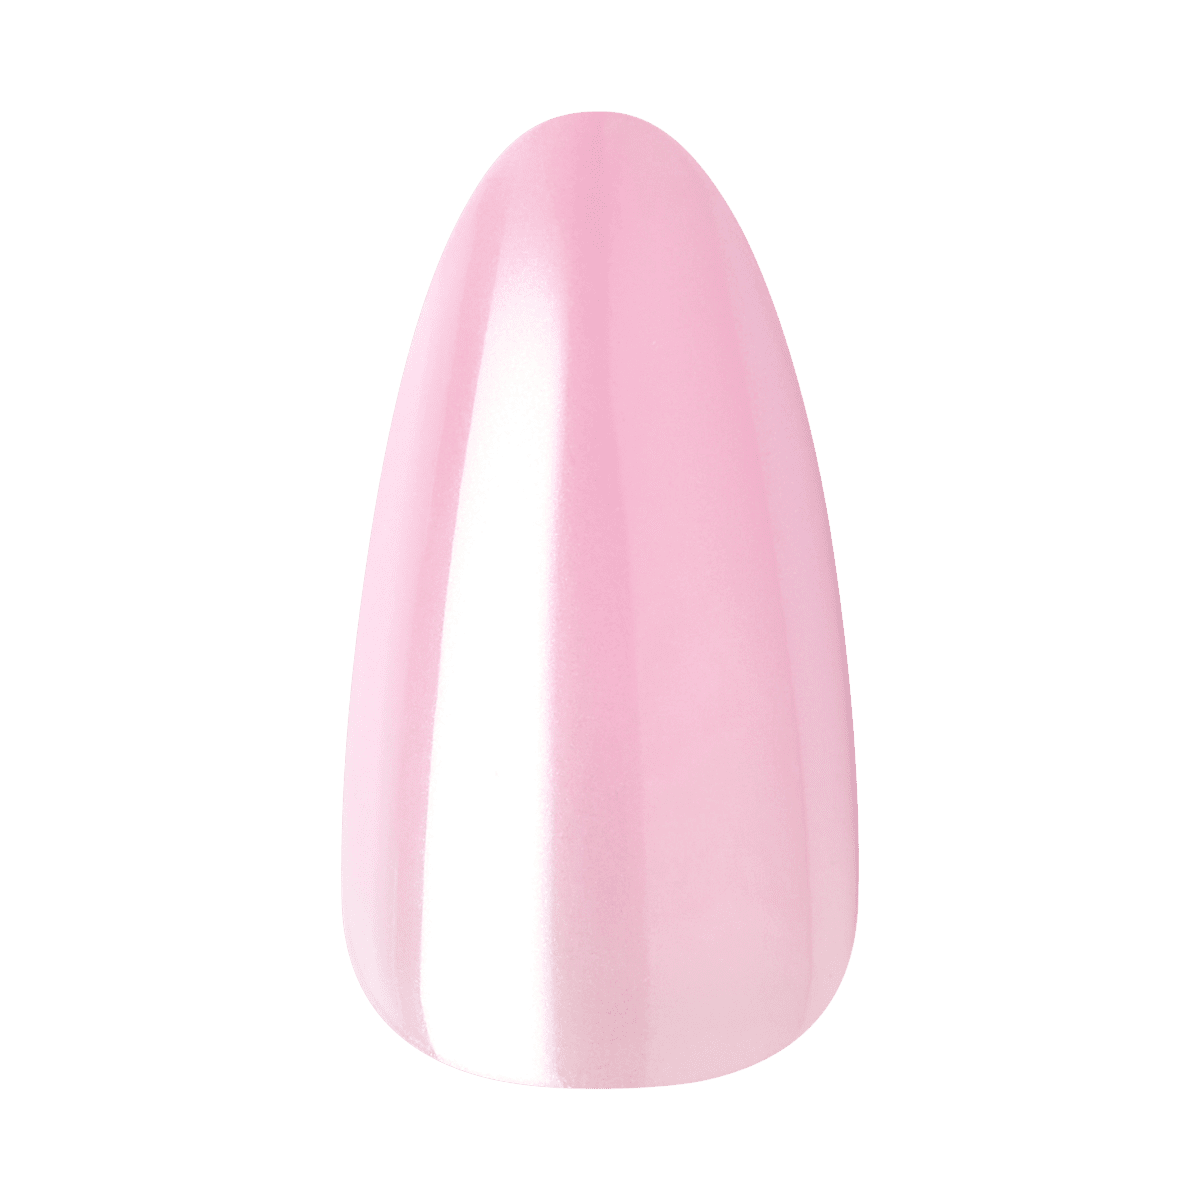 KISS Glazed Donut Nails - Pink Sugar